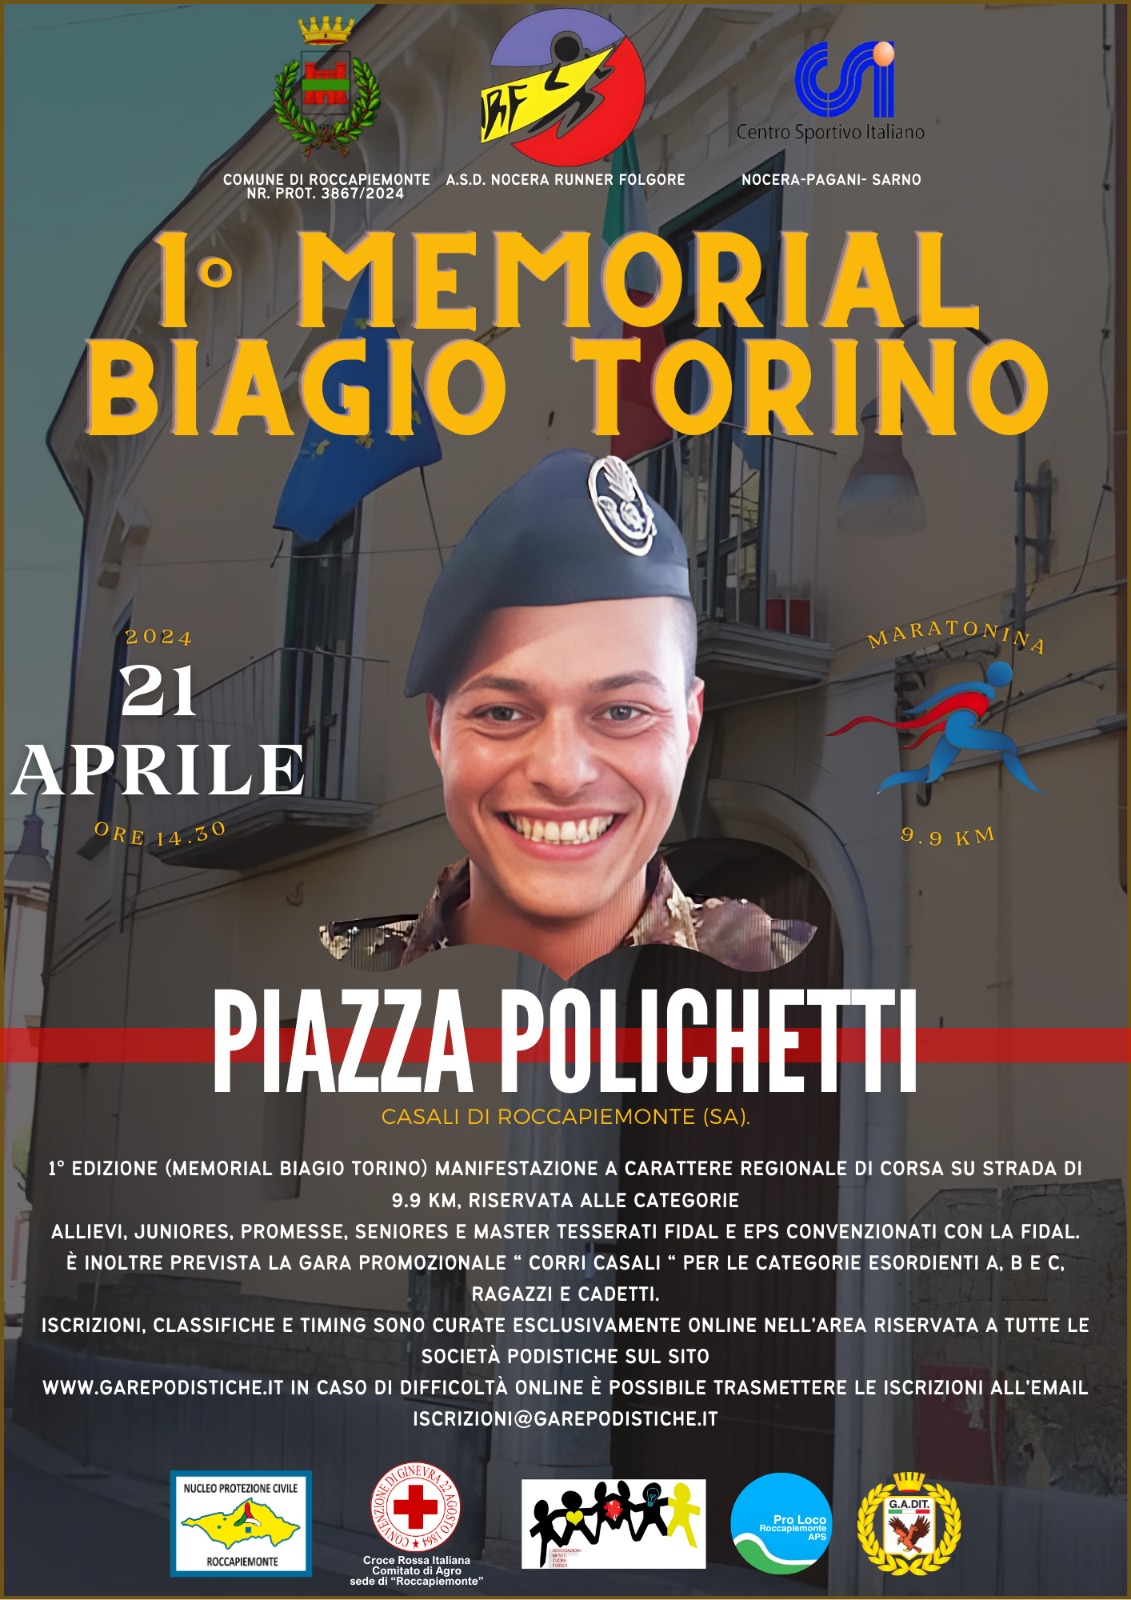 Roccapiemonte: I “Memorial BiagioTorino”, gara podistica